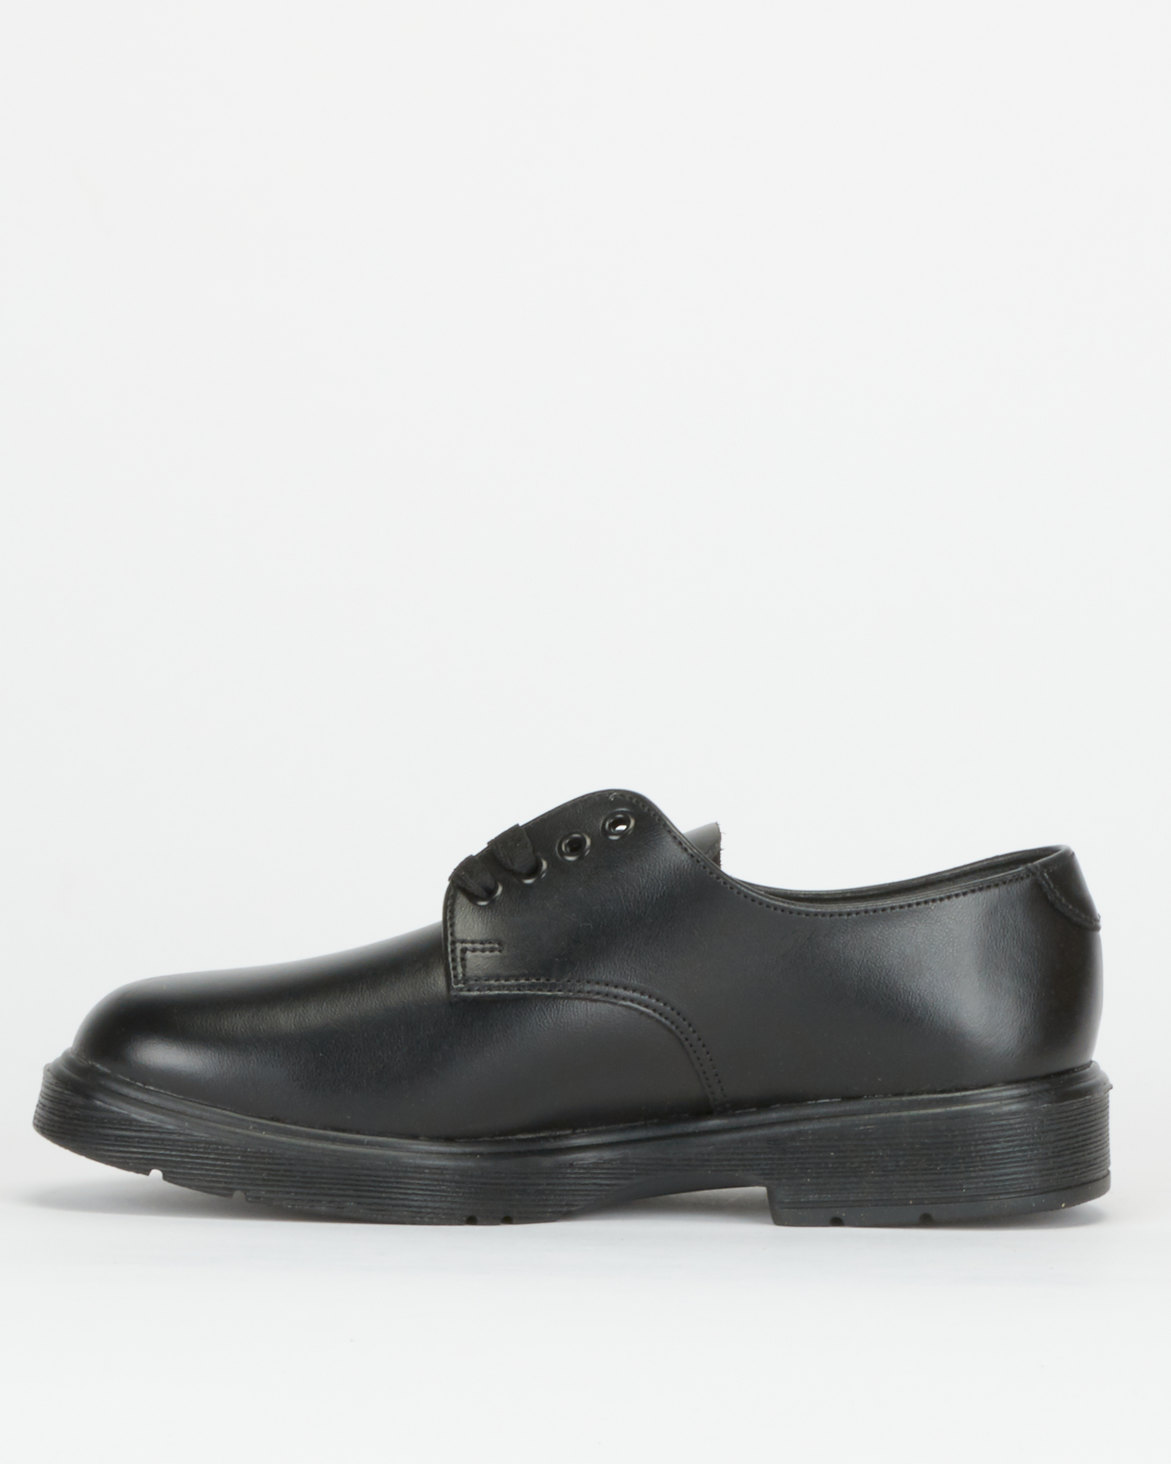 Toughees Boys Clerk Leather School Shoes Black | Zando